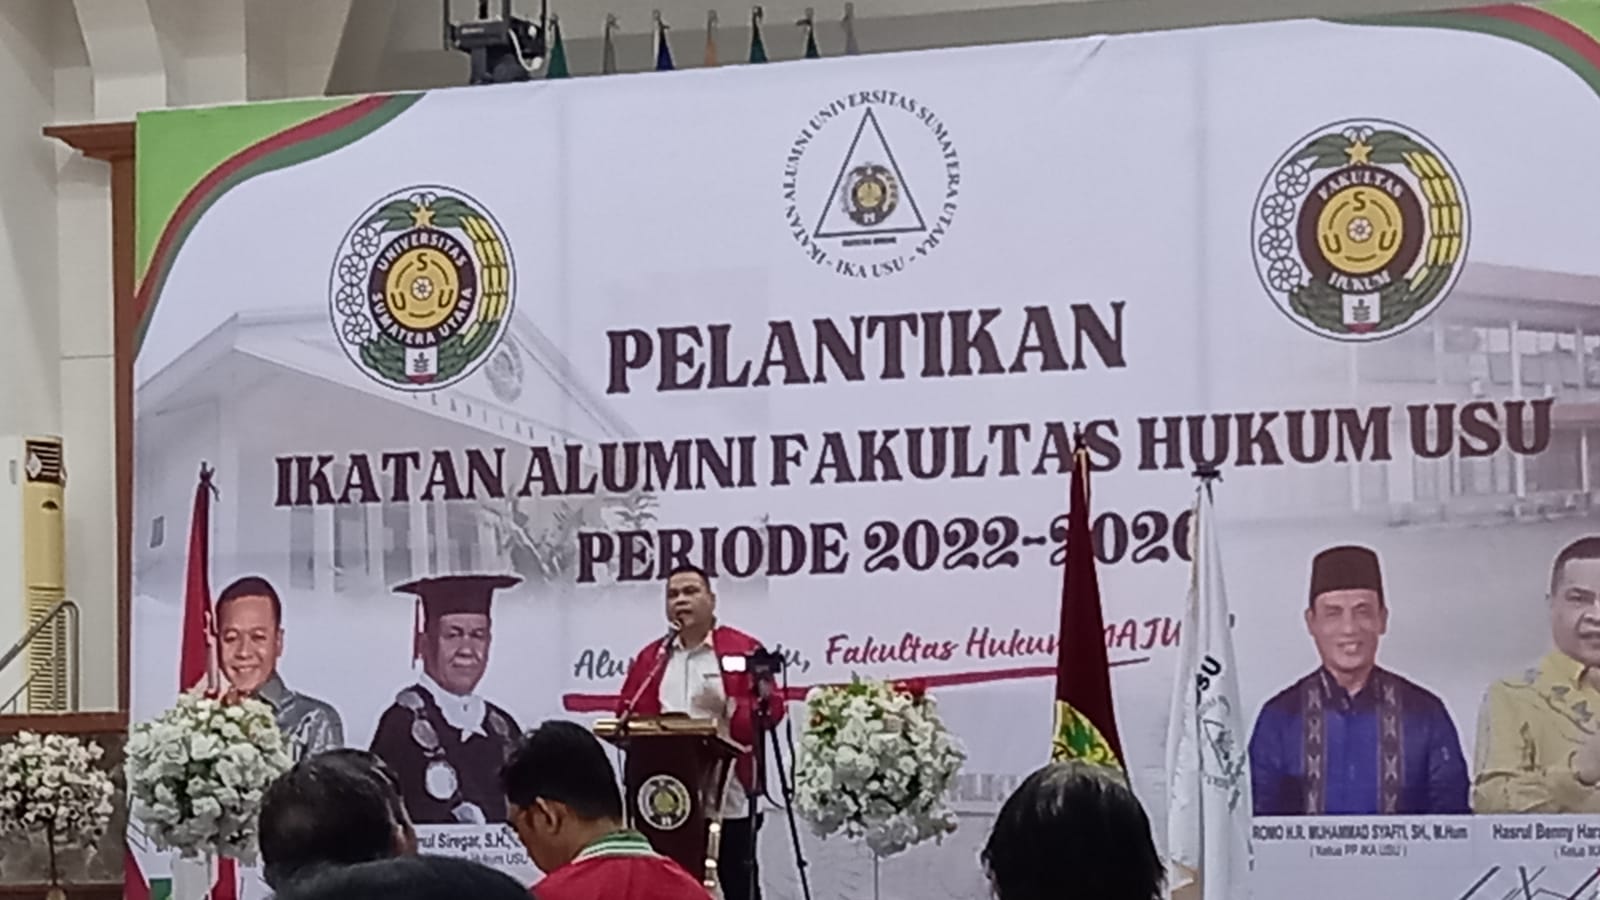 Photo of Hasrul Benny Harahap Ketua Alumni Fakultas Hukum USU